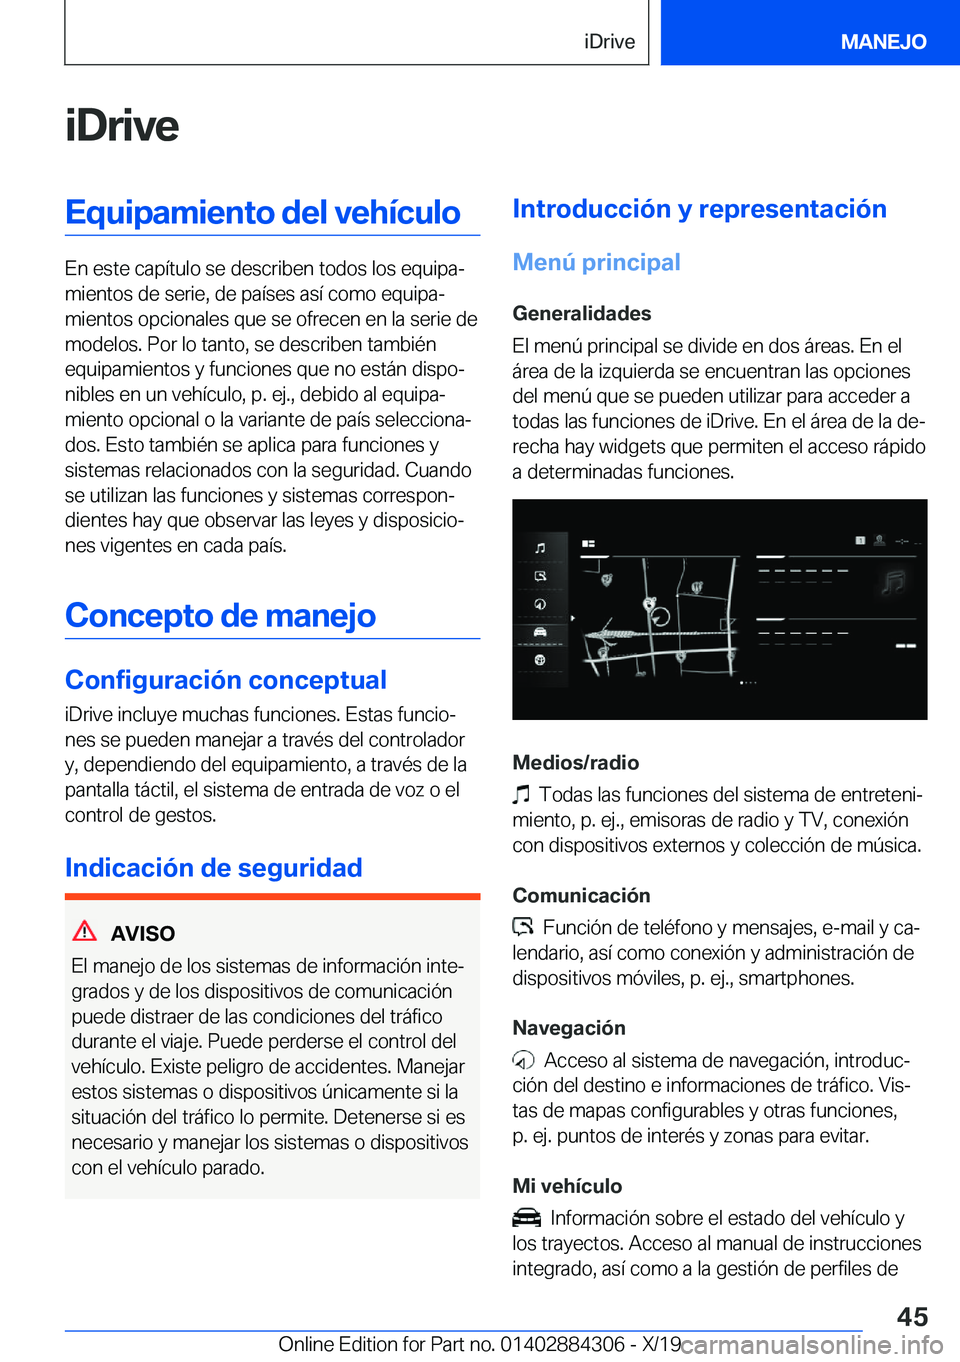 BMW 8 SERIES GRAN COUPE 2020  Manuales de Empleo (in Spanish) �i�D�r�i�v�e�E�q�u�i�p�a�m�i�e�n�t�o��d�e�l��v�e�h�